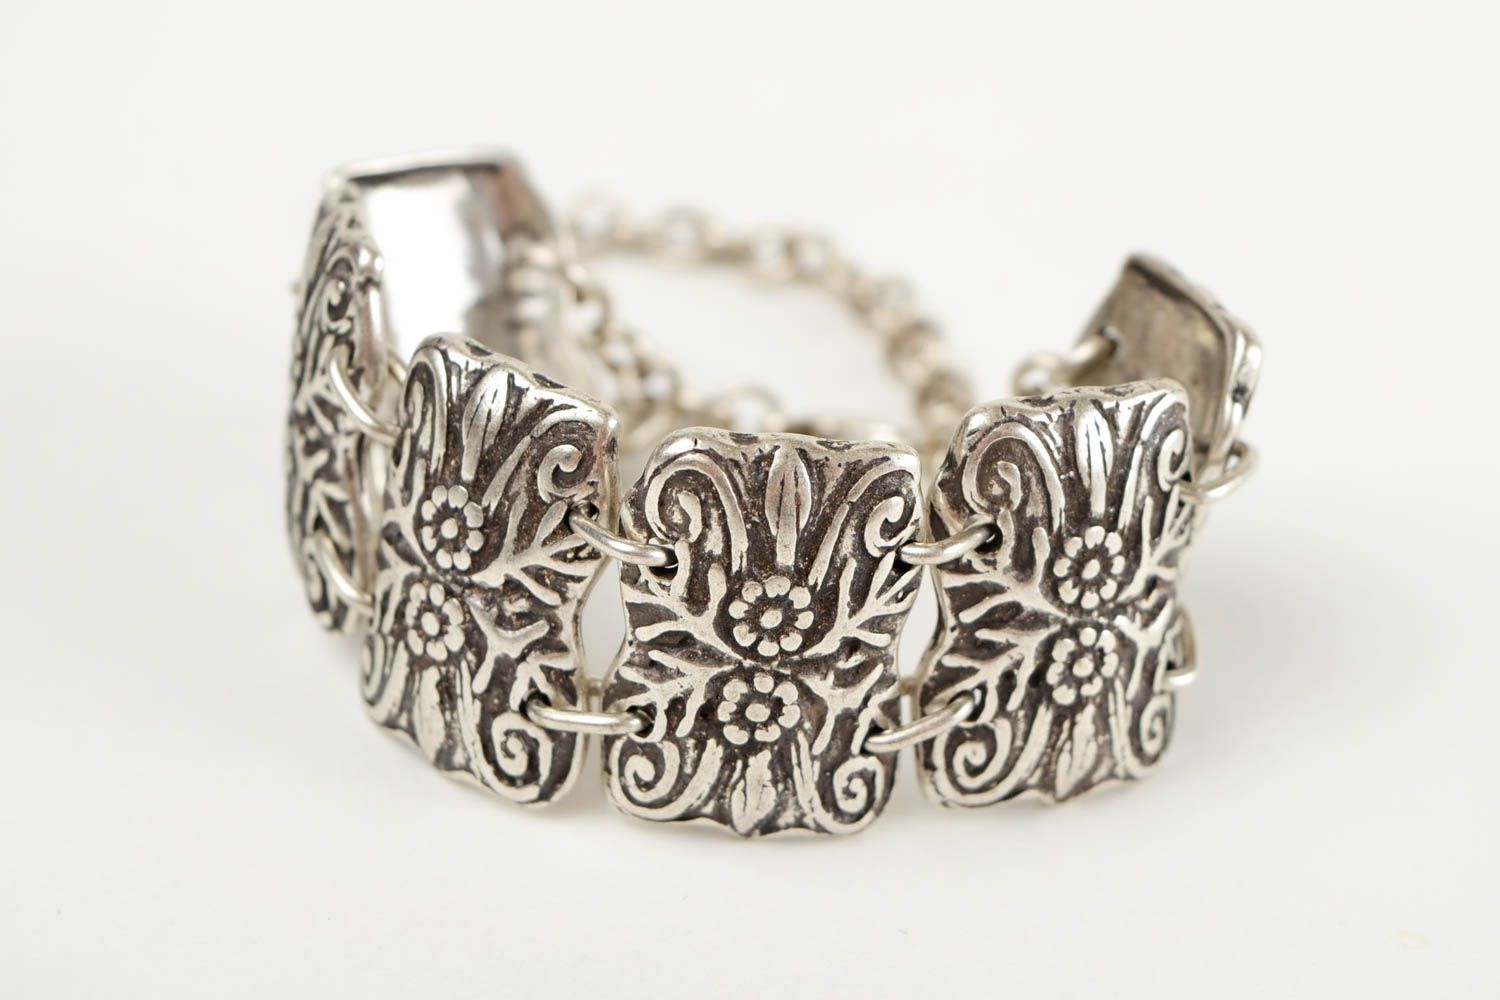 Stylish handmade metal bracelet metal craft ideas cuff bracelet designs photo 5